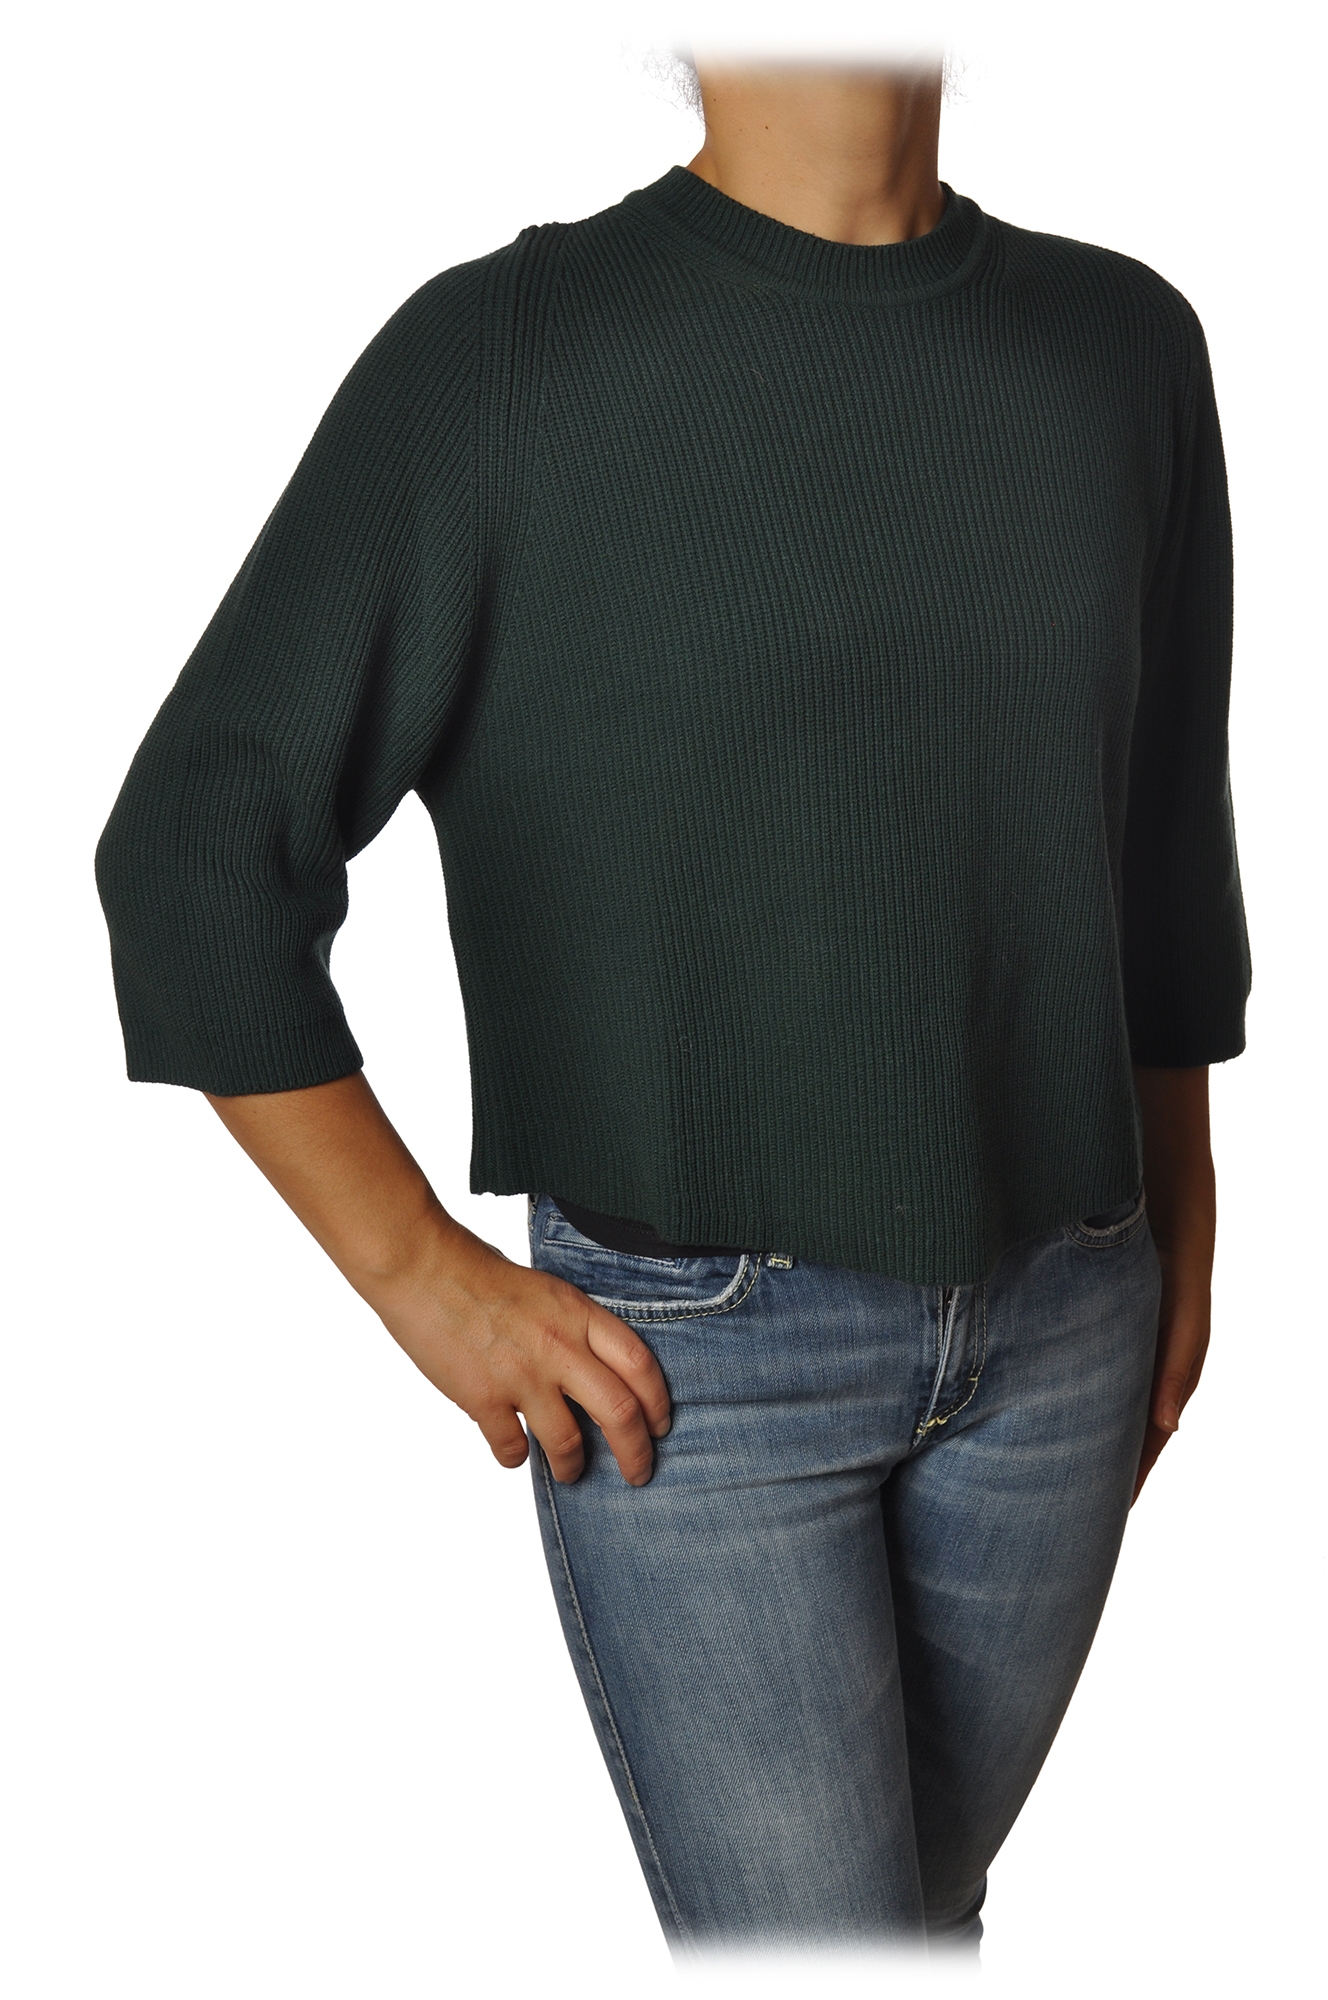 Elisabetta Franchi Woman's Sweater